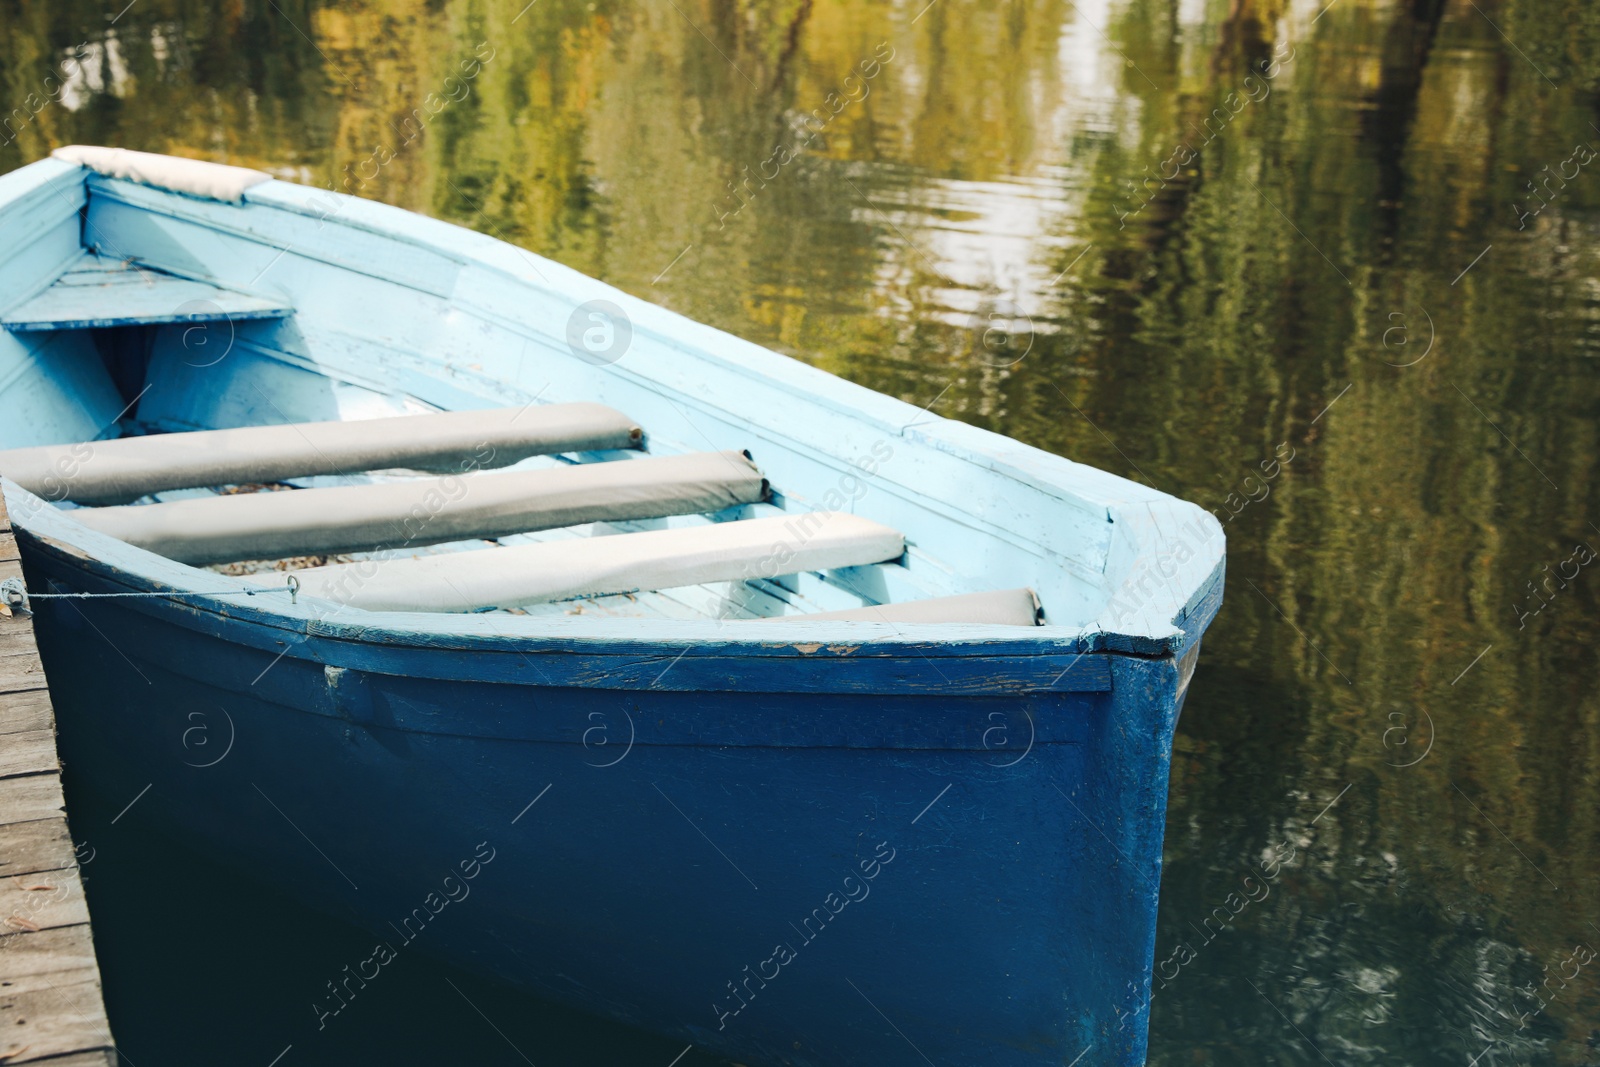 Photo of Light blue wooden boat on lake near pier